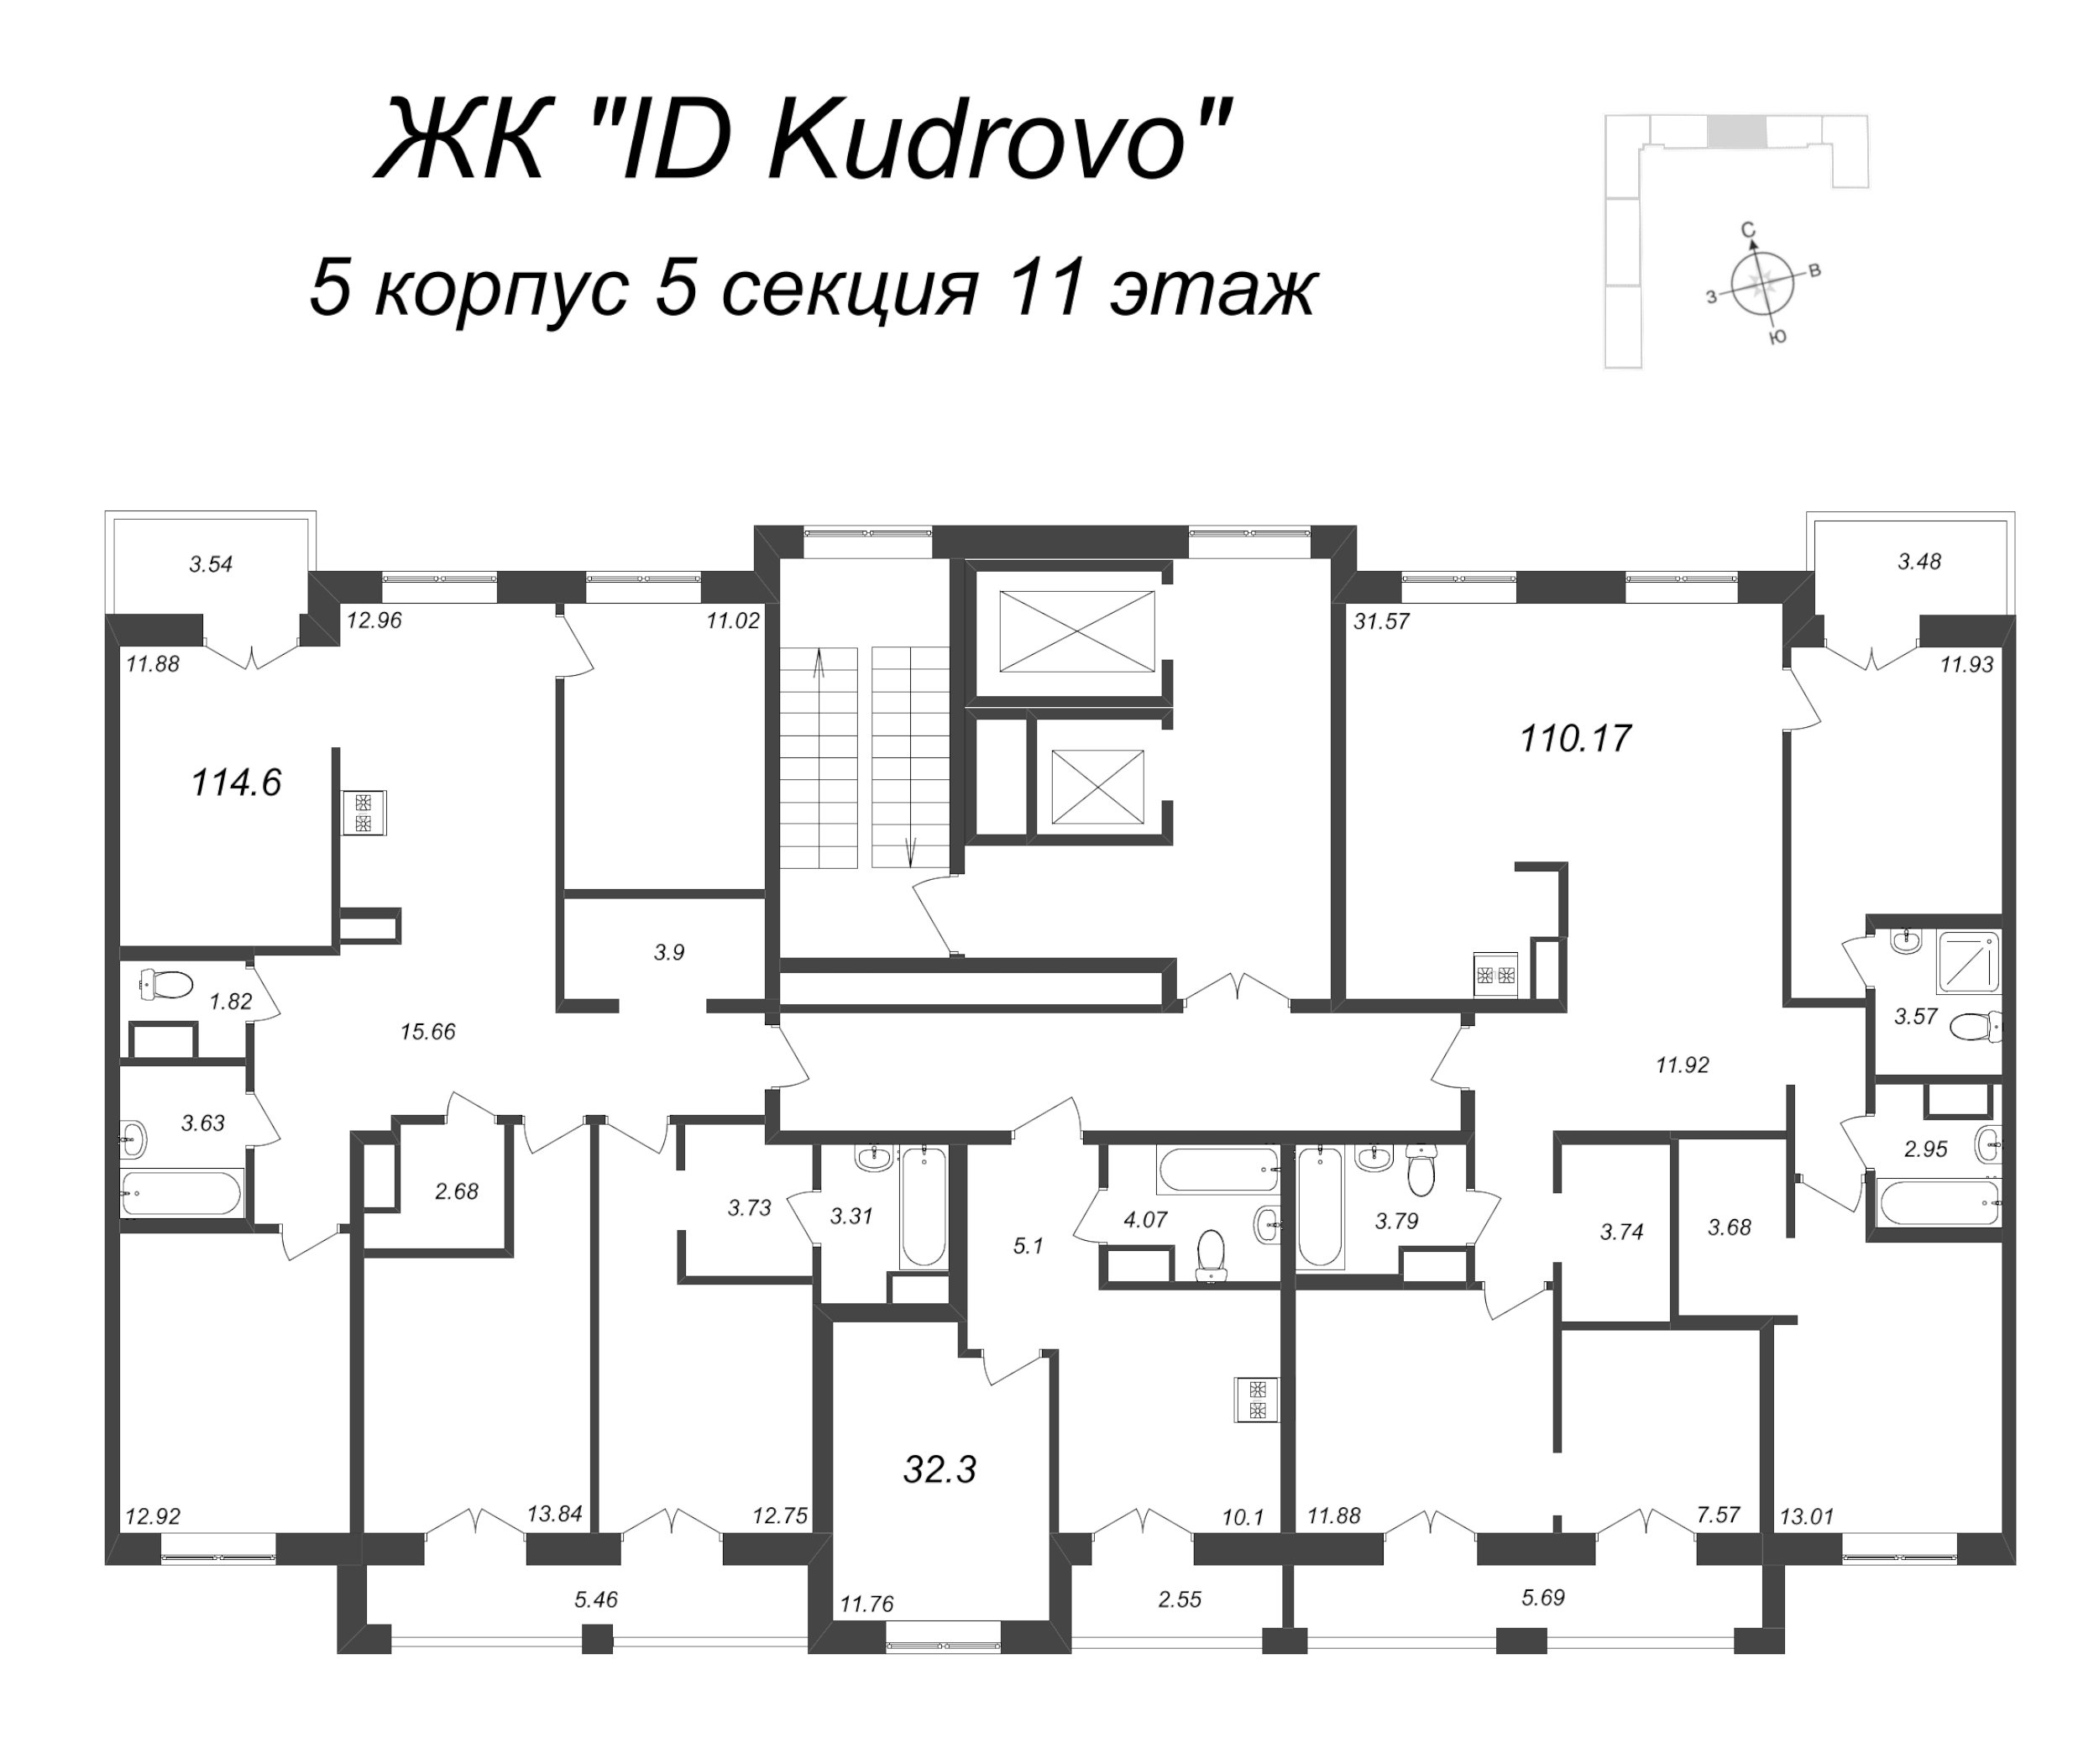 5-комнатная квартира, 114.6 м² в ЖК "ID Kudrovo" - планировка этажа